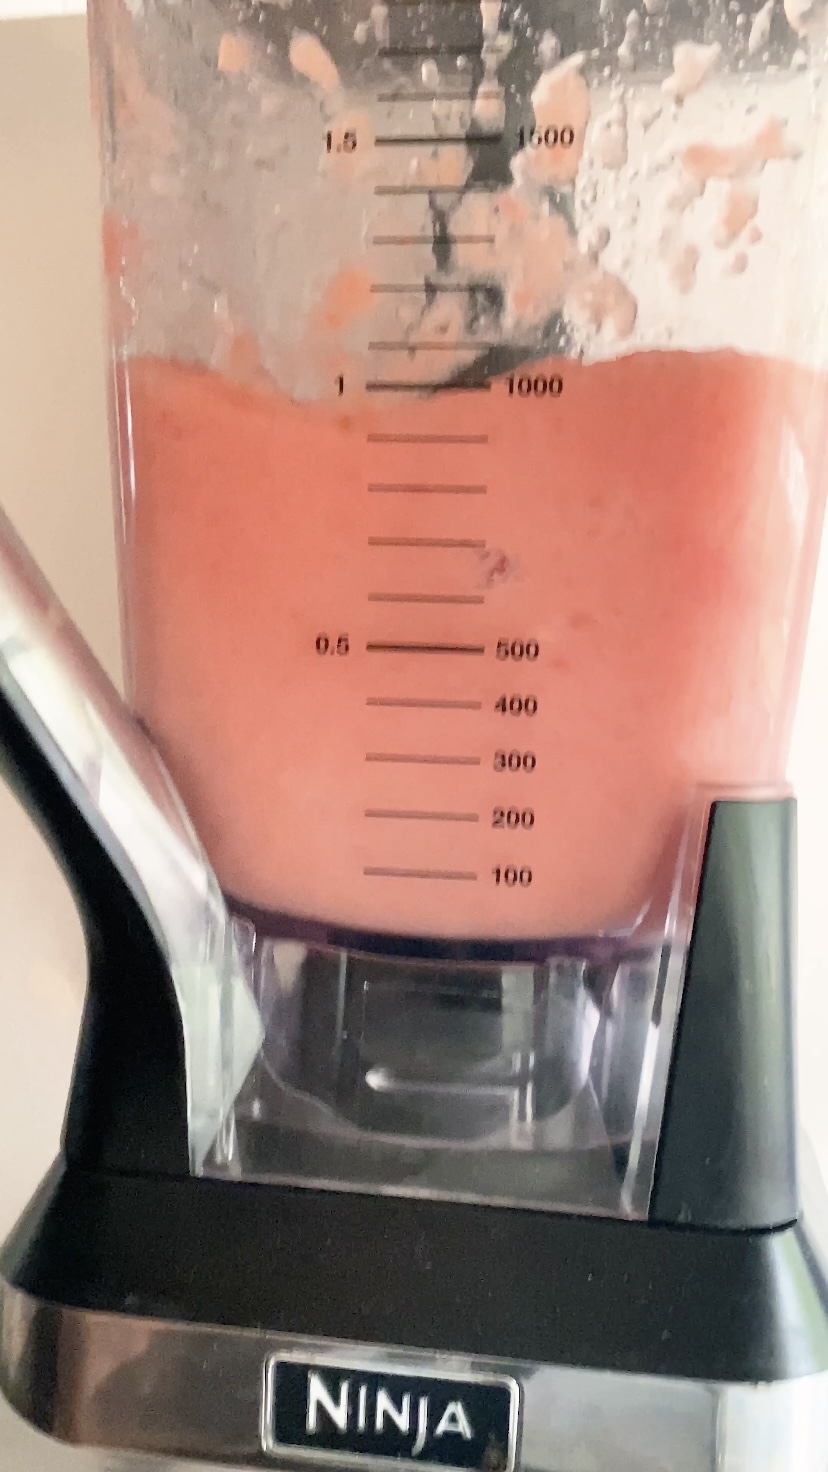 Blending a pink margarita in a blender,